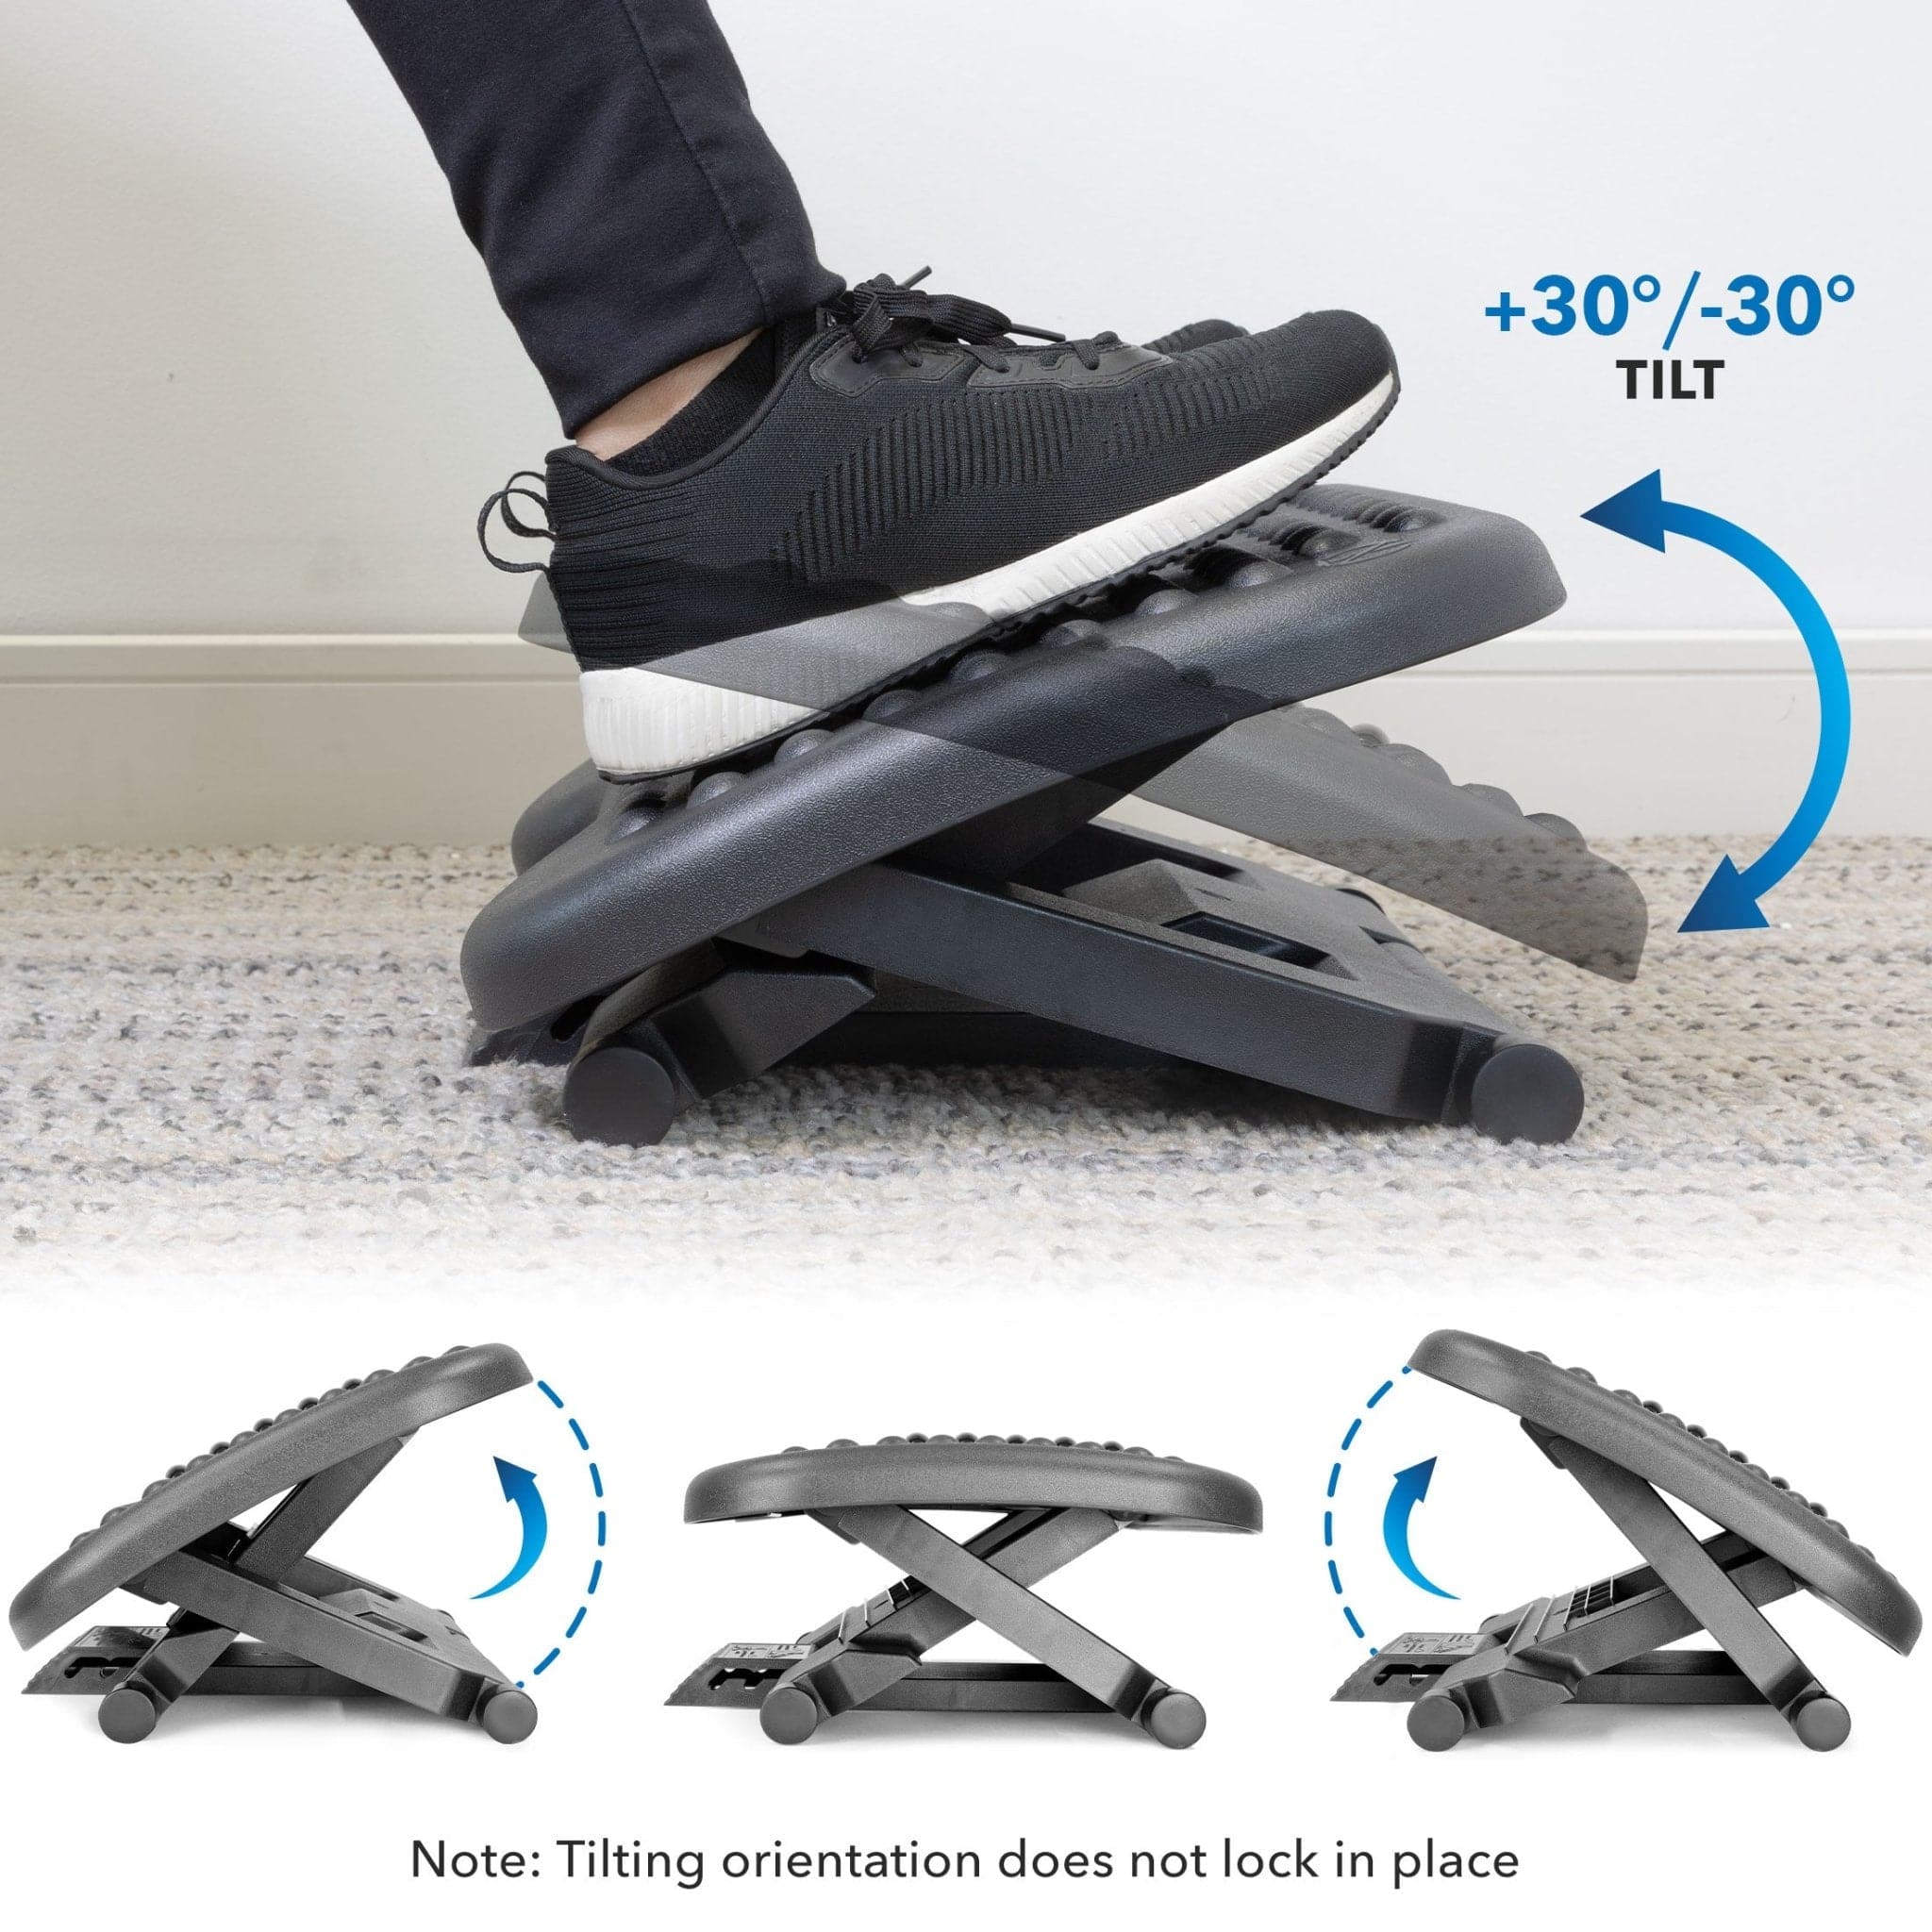  3M Adjustable Foot Rest, 18 Inch Wide Non-skid